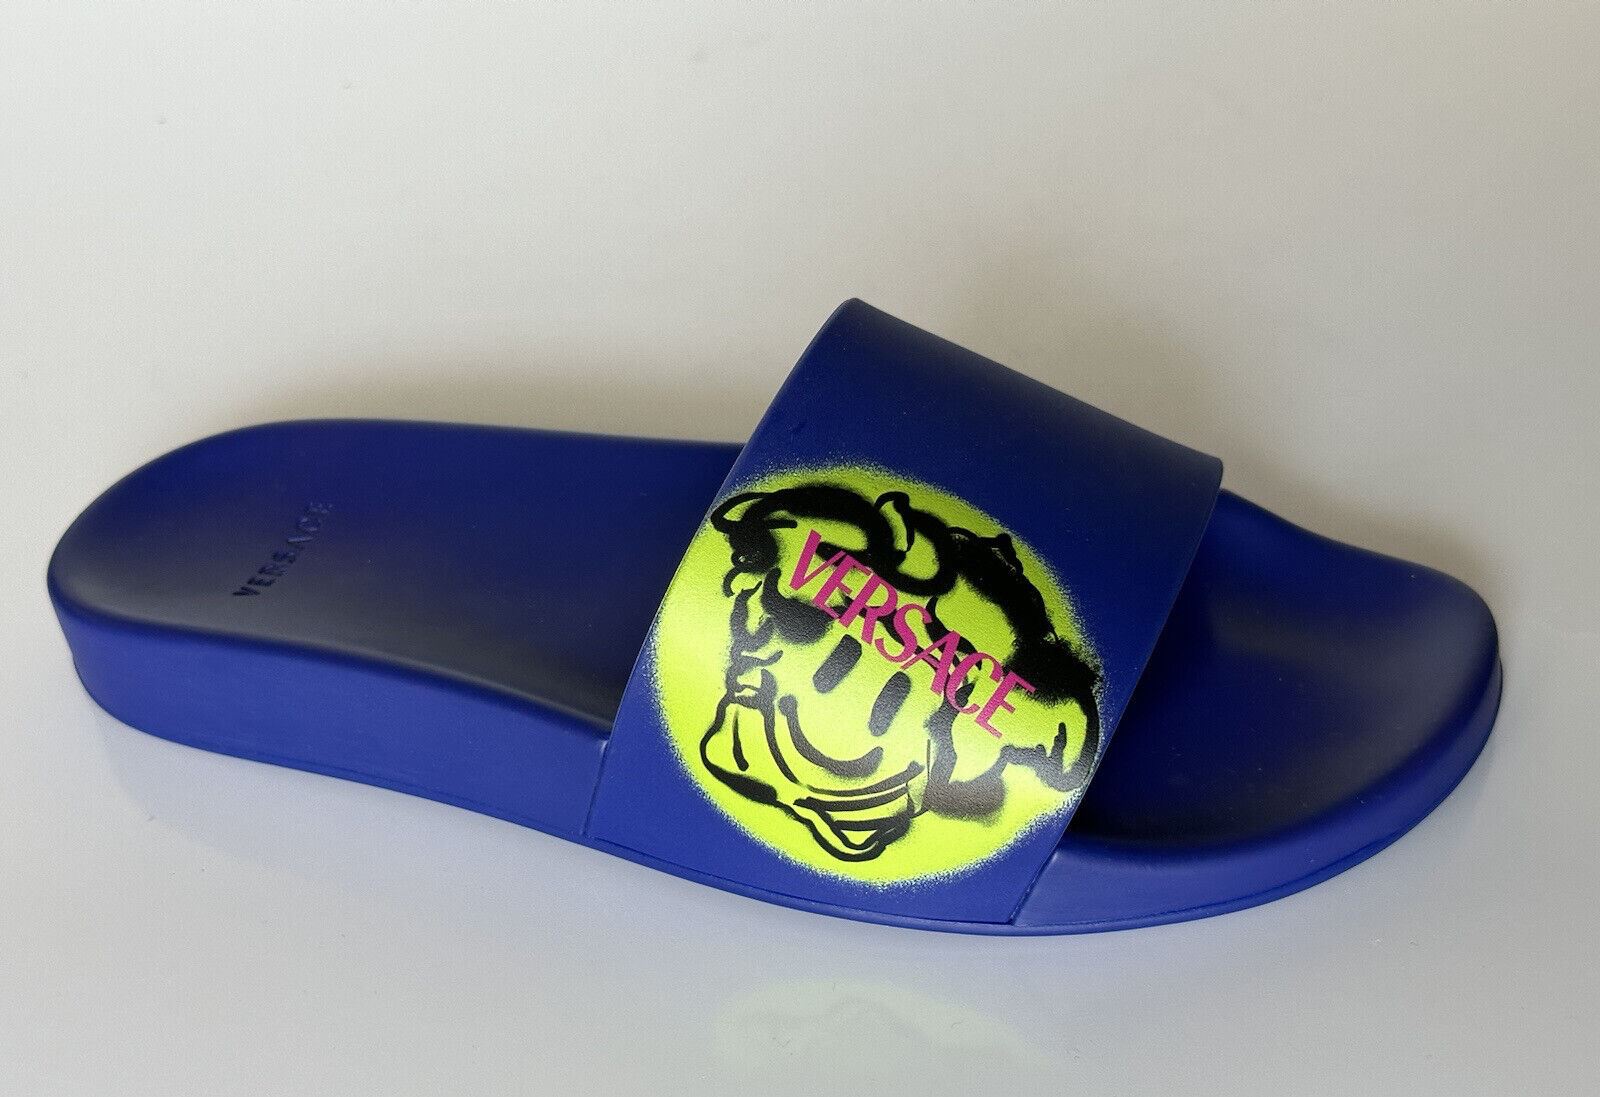 NIB $450 Versace Smiley Medusa Slides Sandals Blue/Lime 12 US (45 Eu) DSU6516 IT